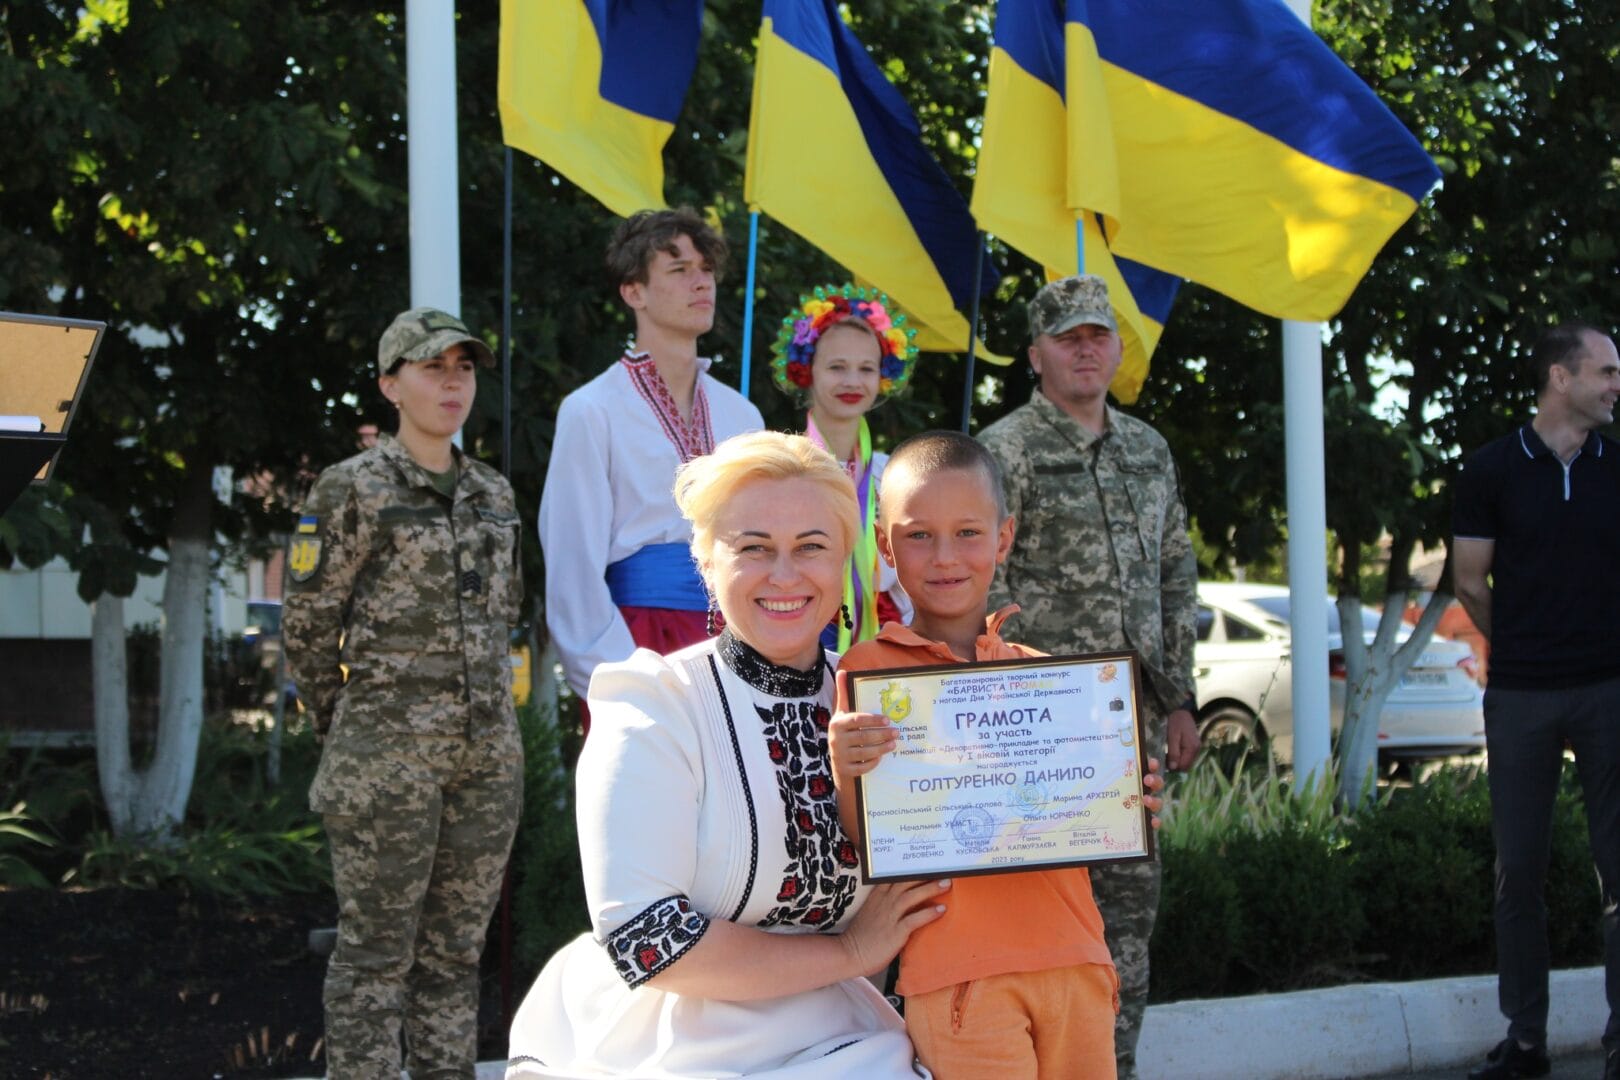 Community Head on the Ukrainian Statehood Day